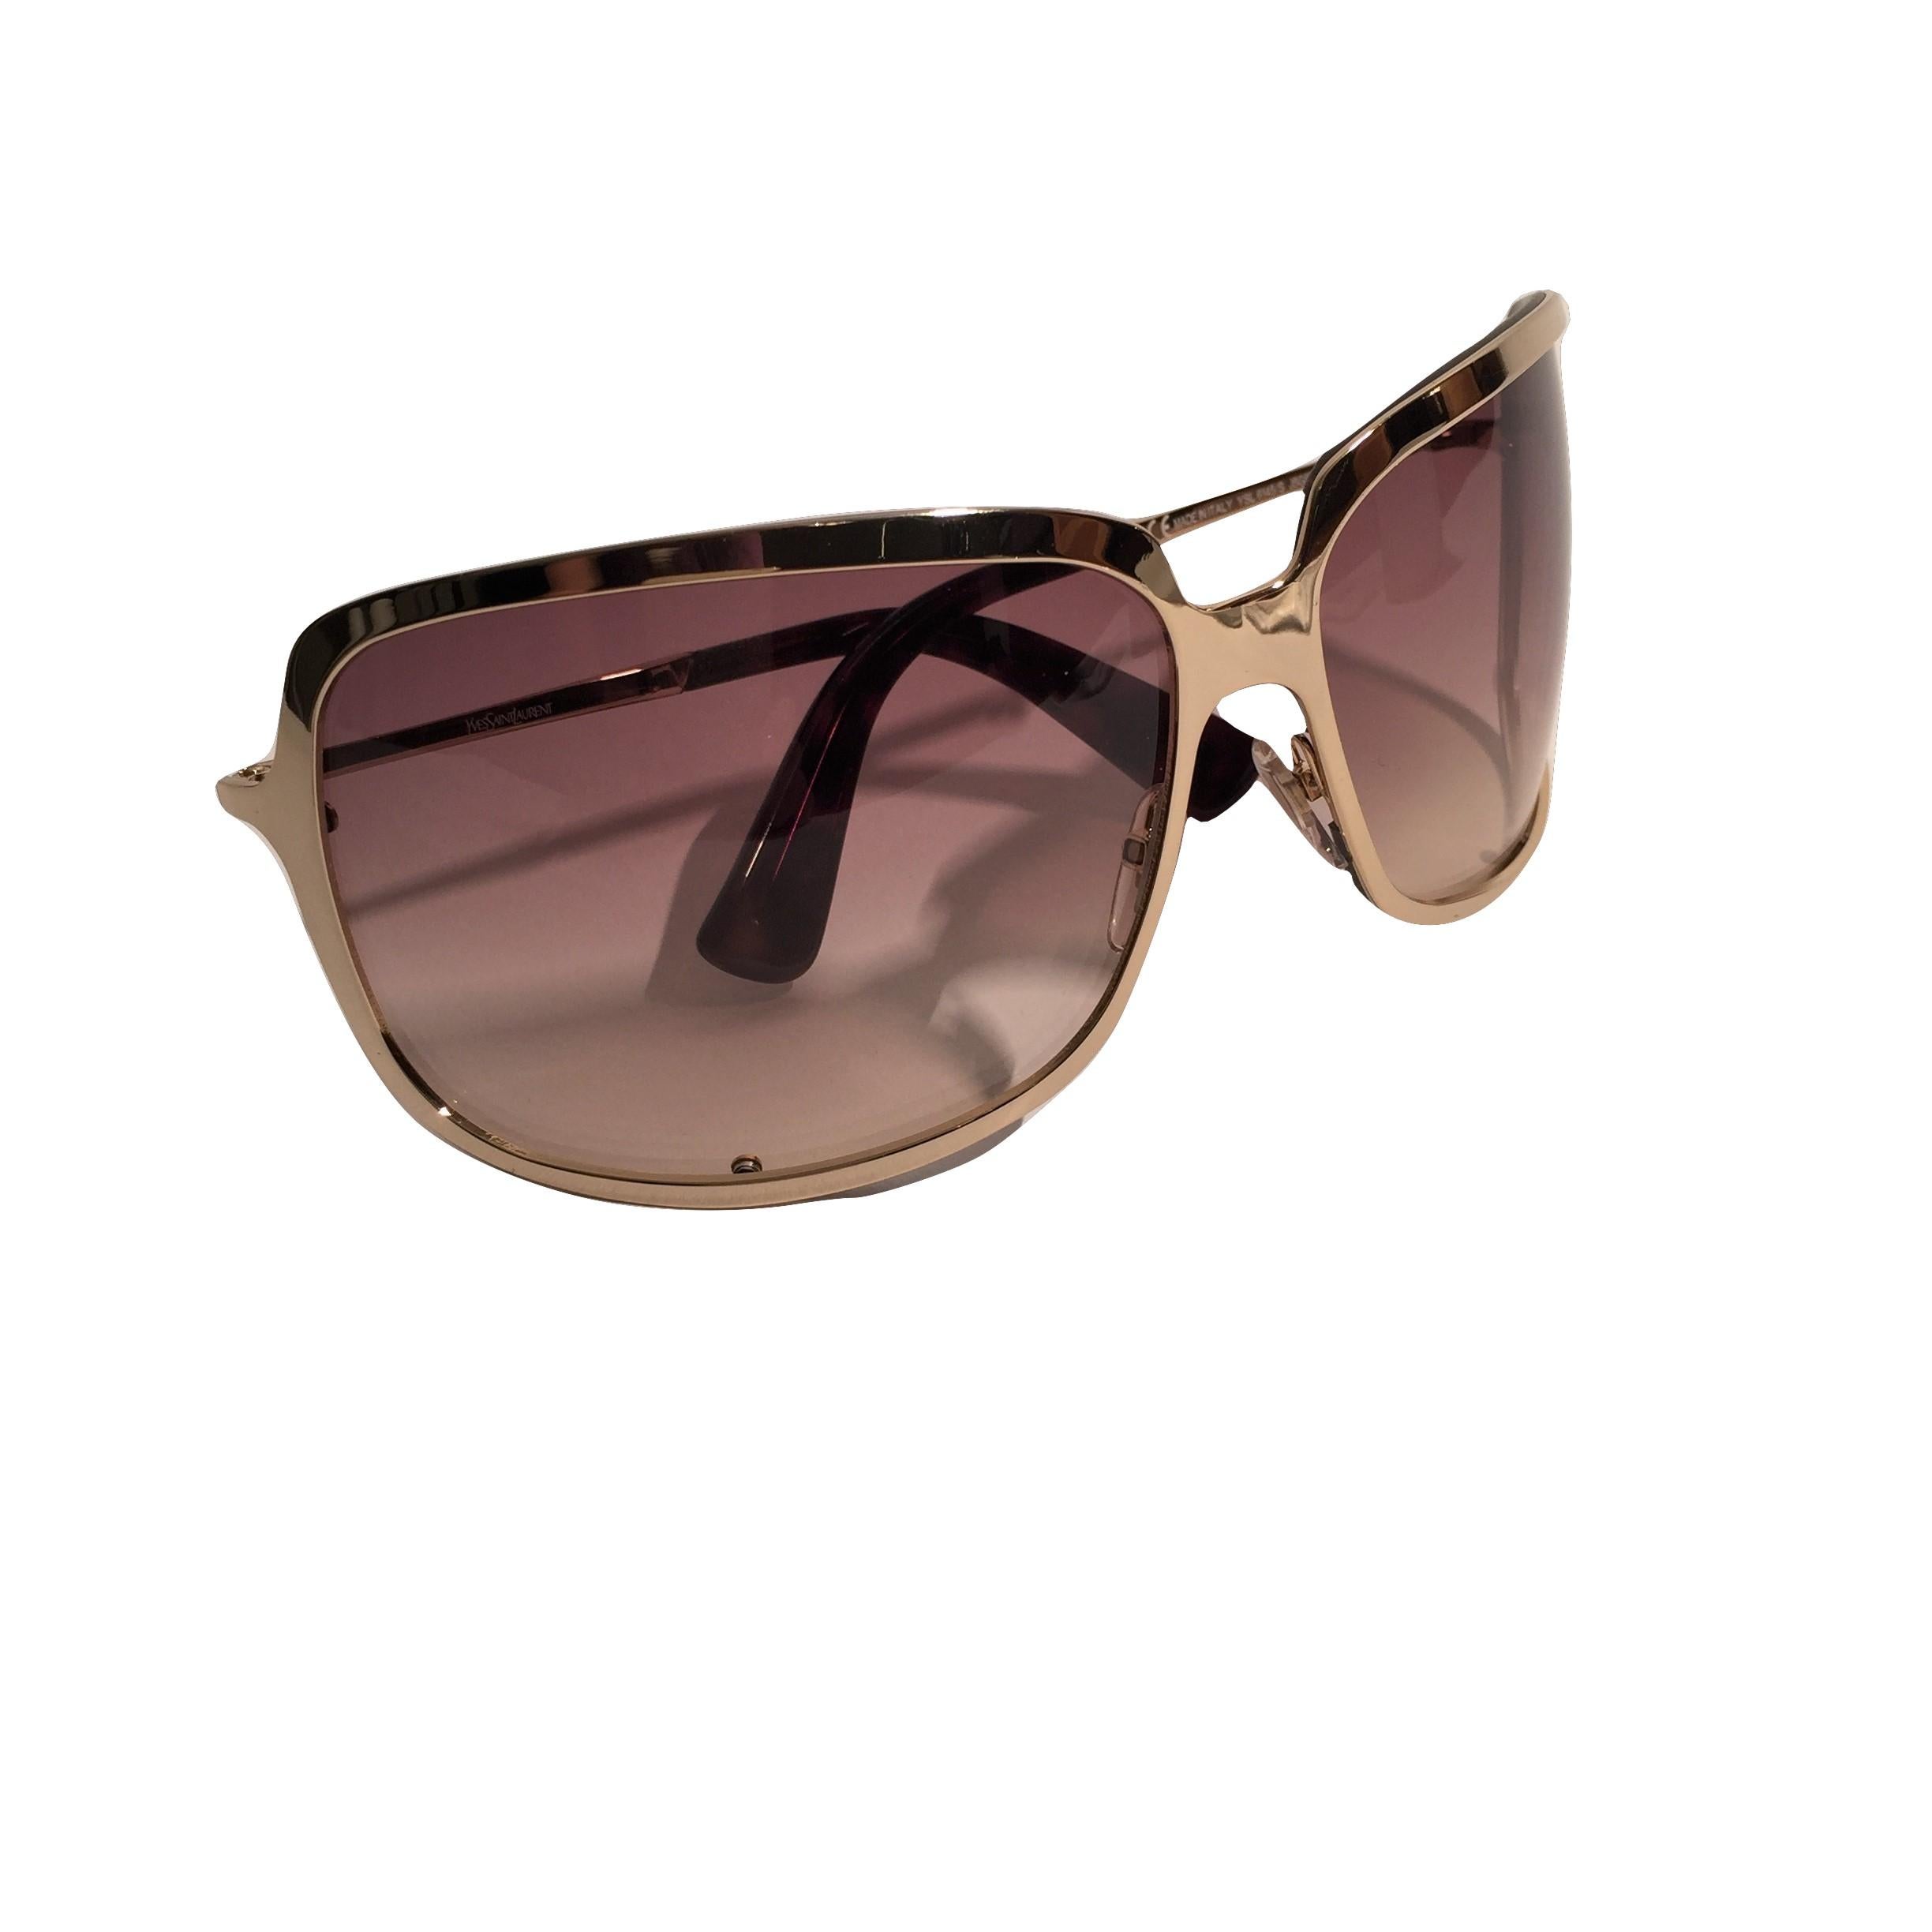 New Yves Saint Laurent YSL Gold Wrap Sunglasses W/ Case 4